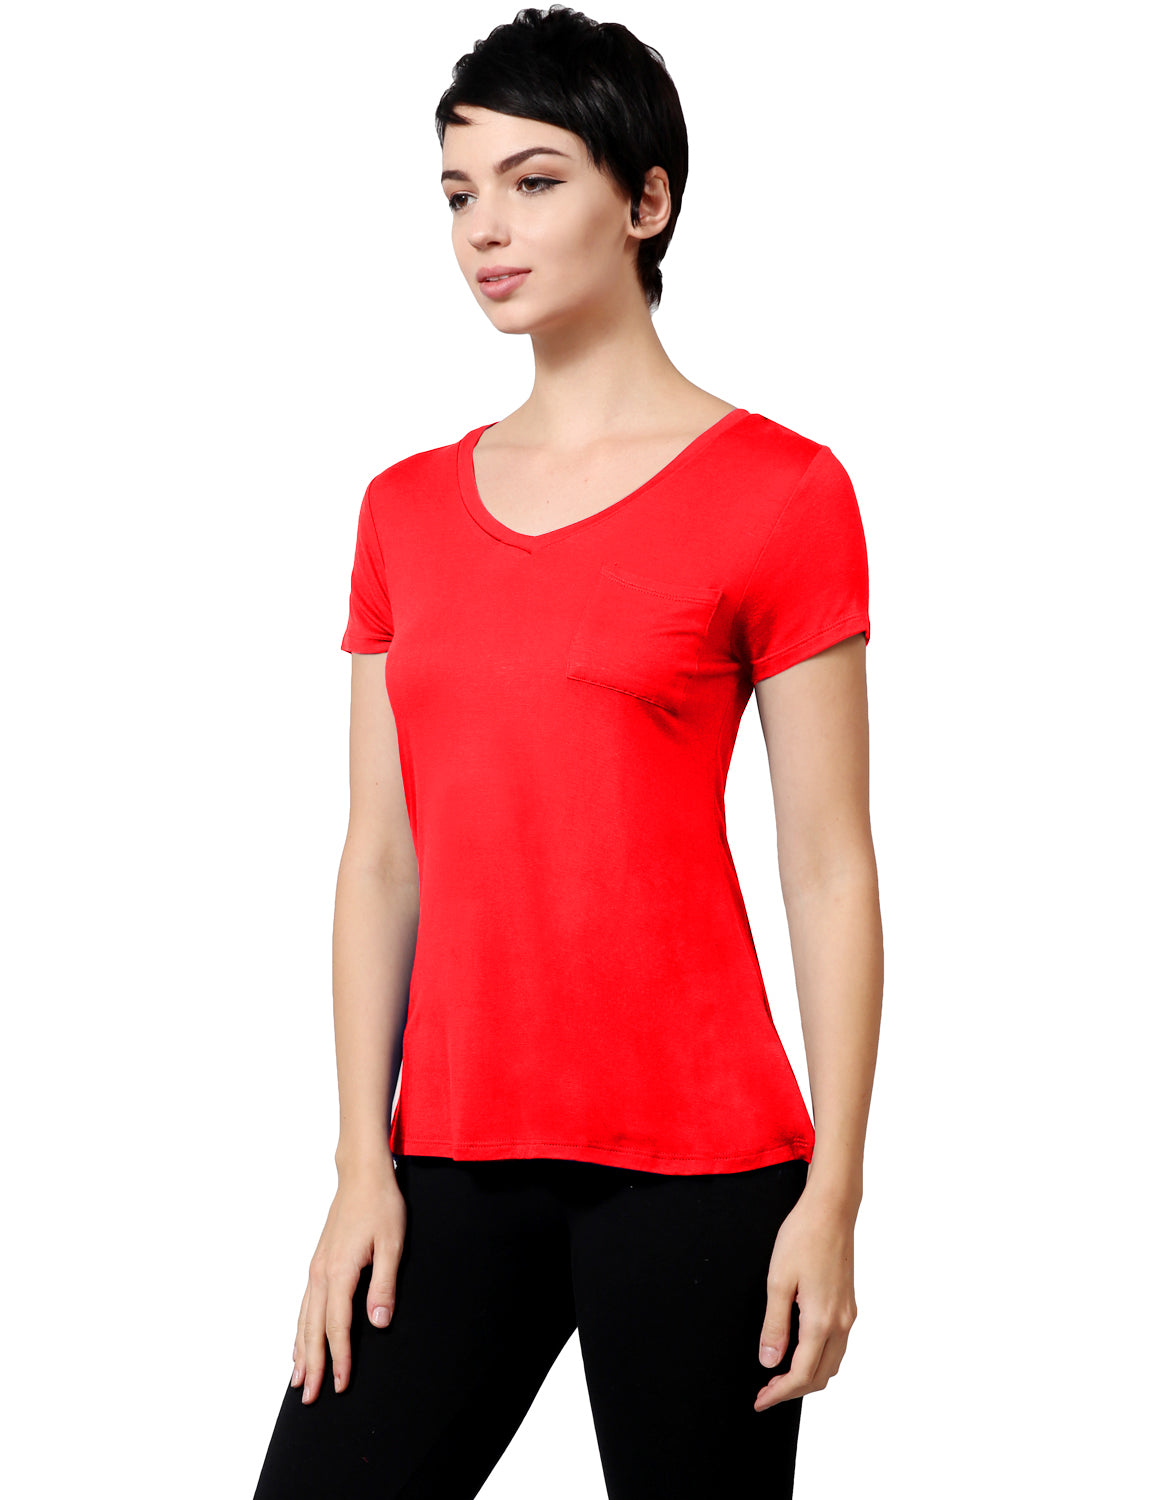 Womens Light V-Neck Basic Short Sleeve Shirt Top with Pocket